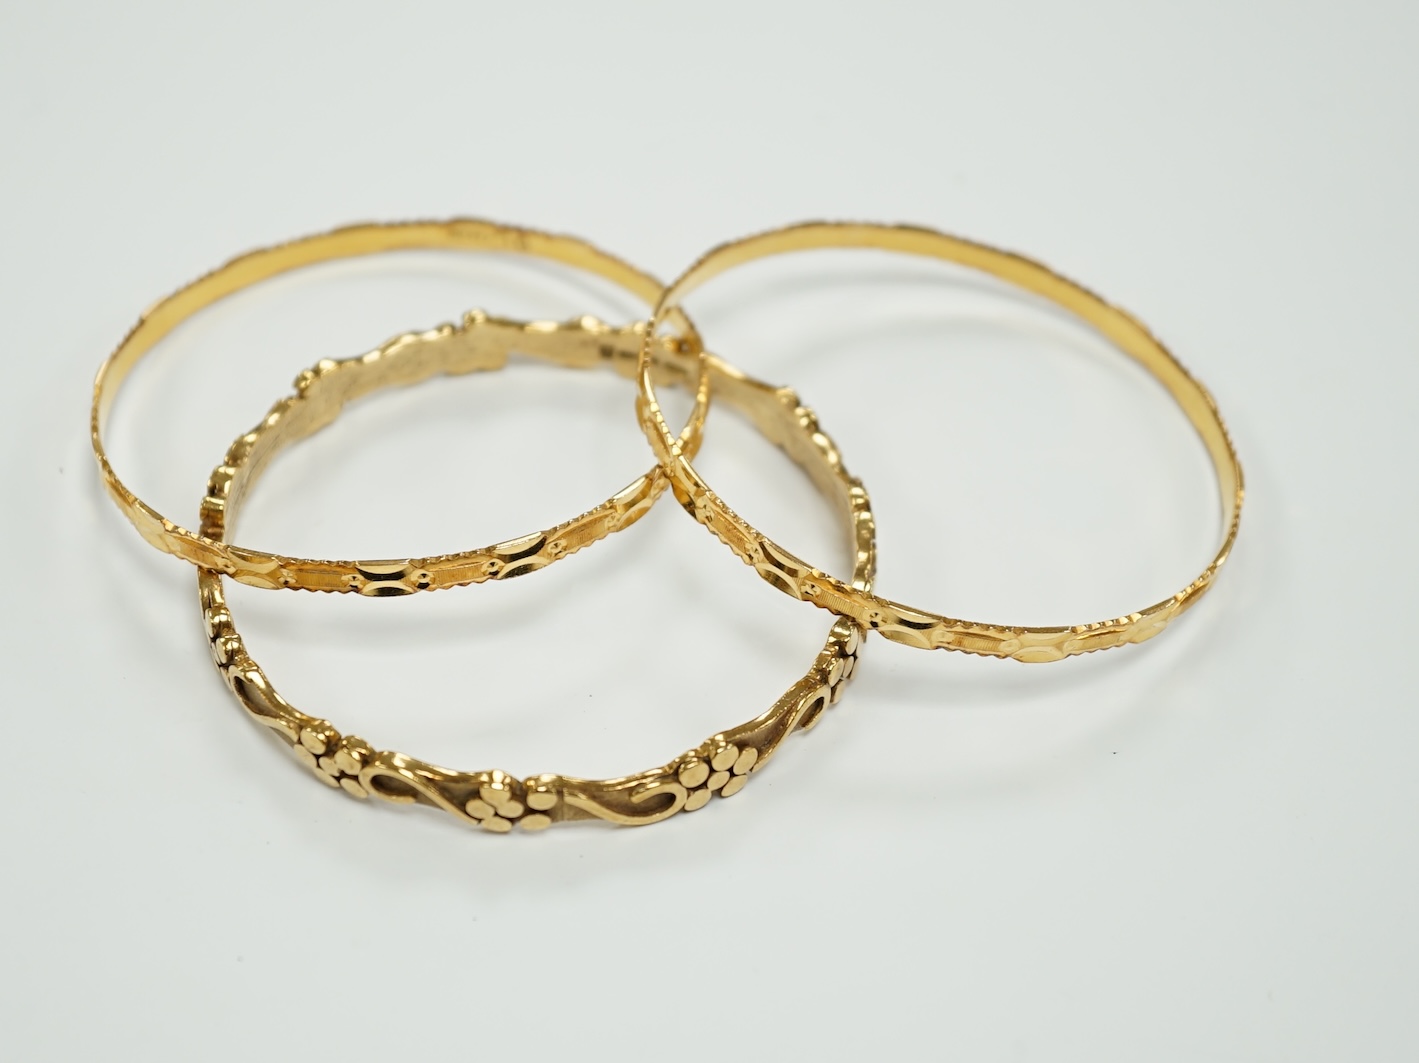 Two 22k bangles, 19.6 grams and a 9ct gold bangle, 20.6 grams.